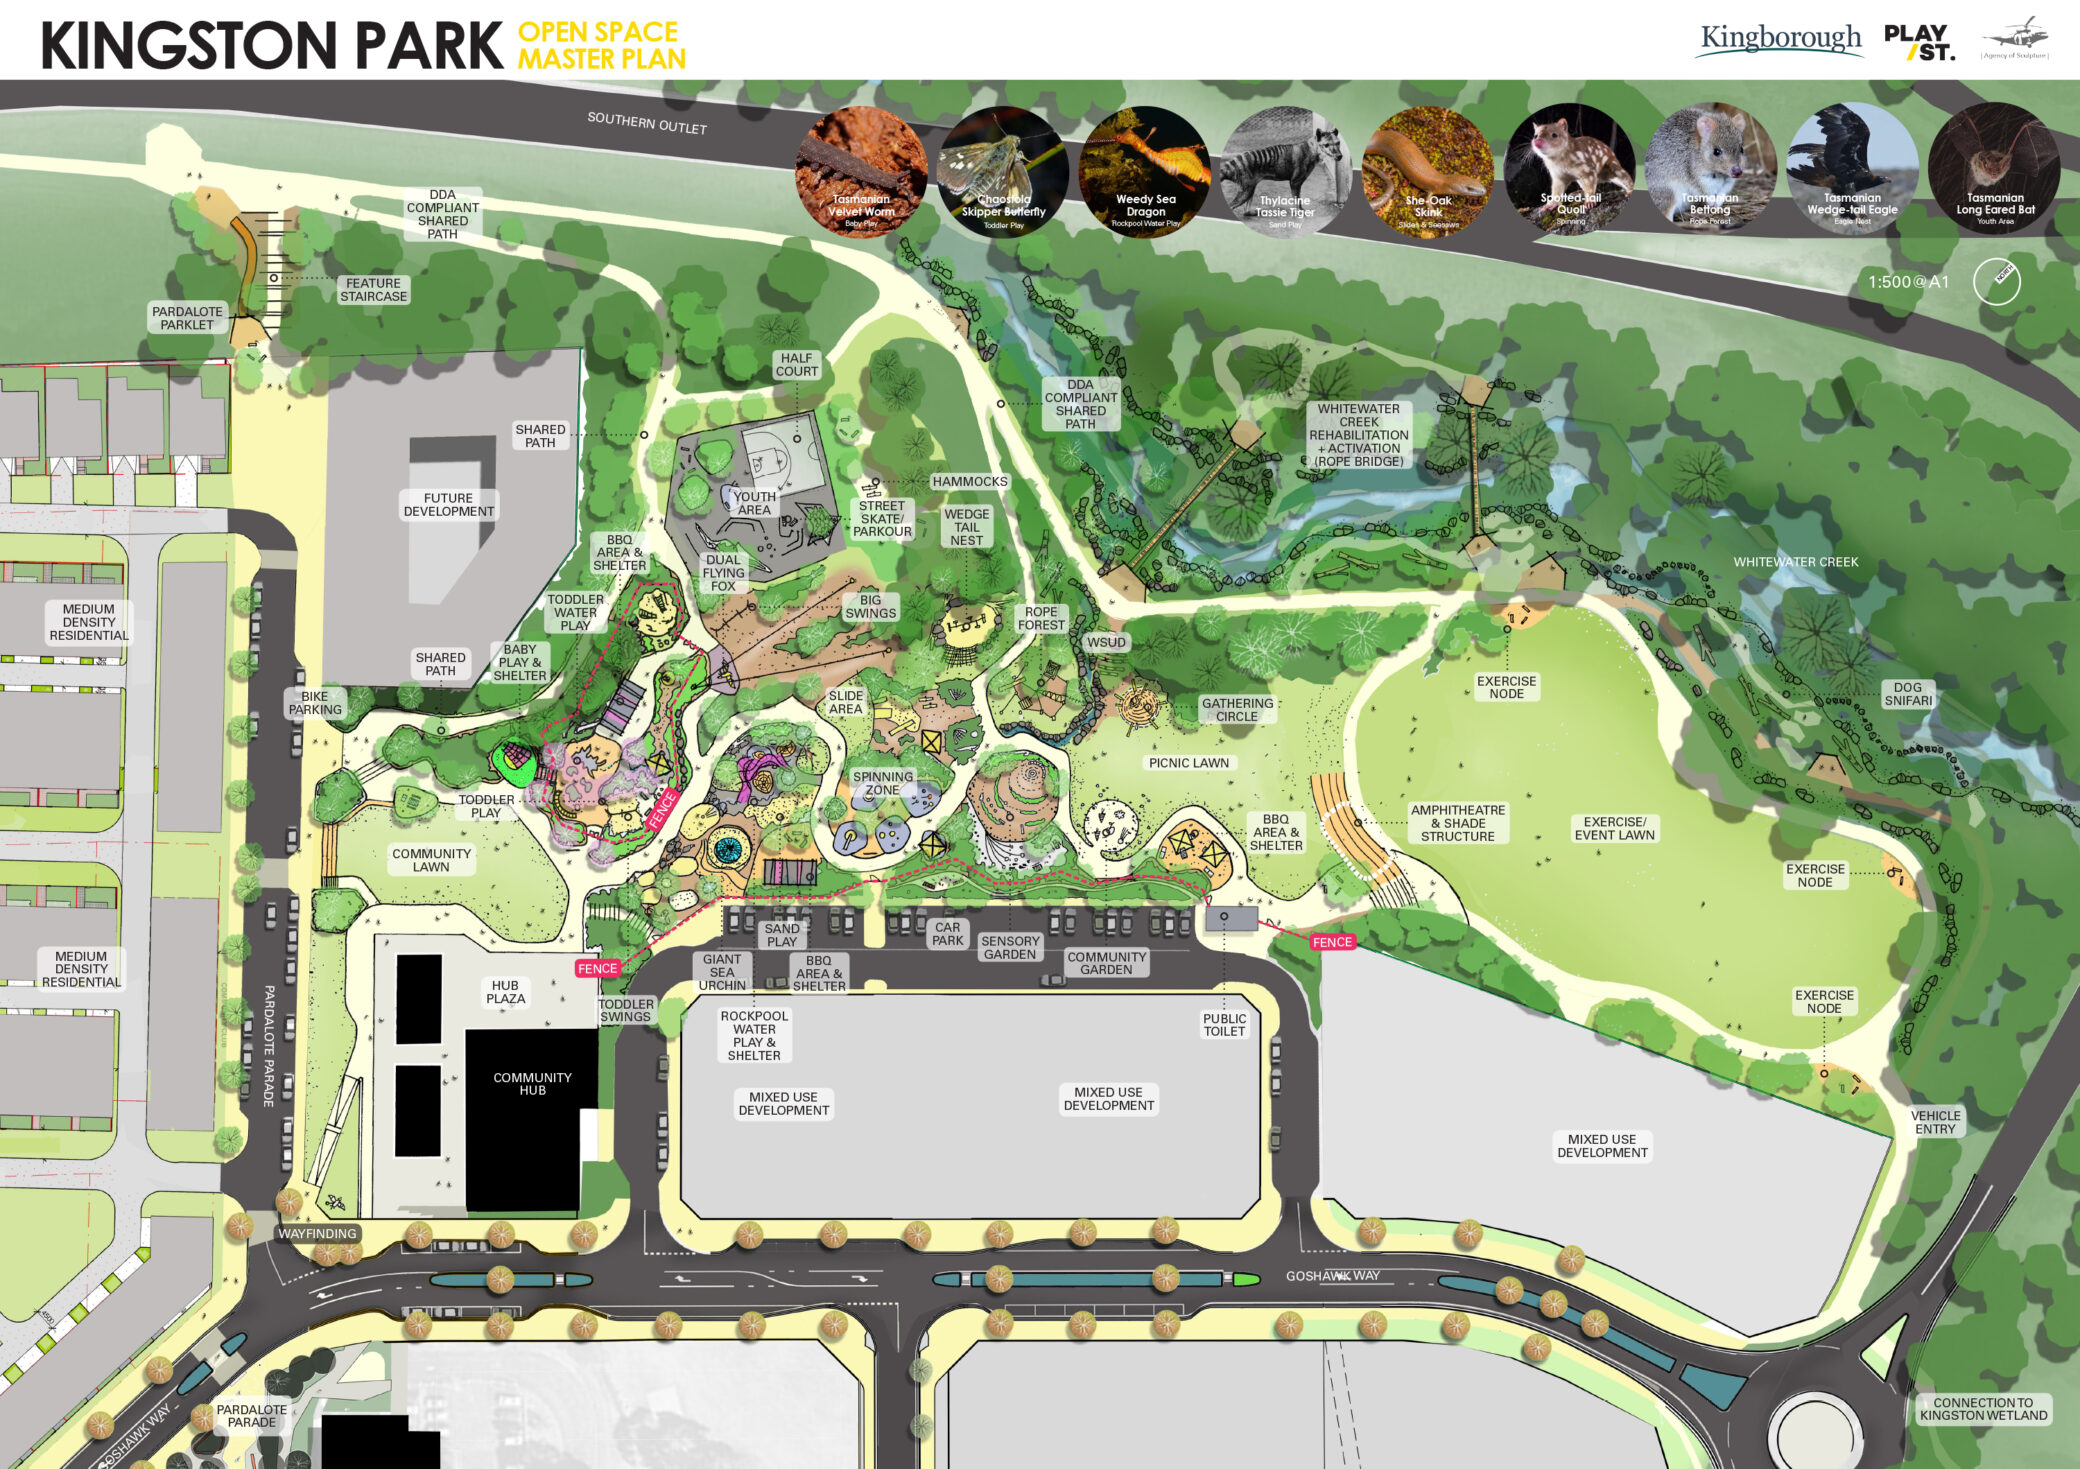 Kingston Park Open Space Master Plan.